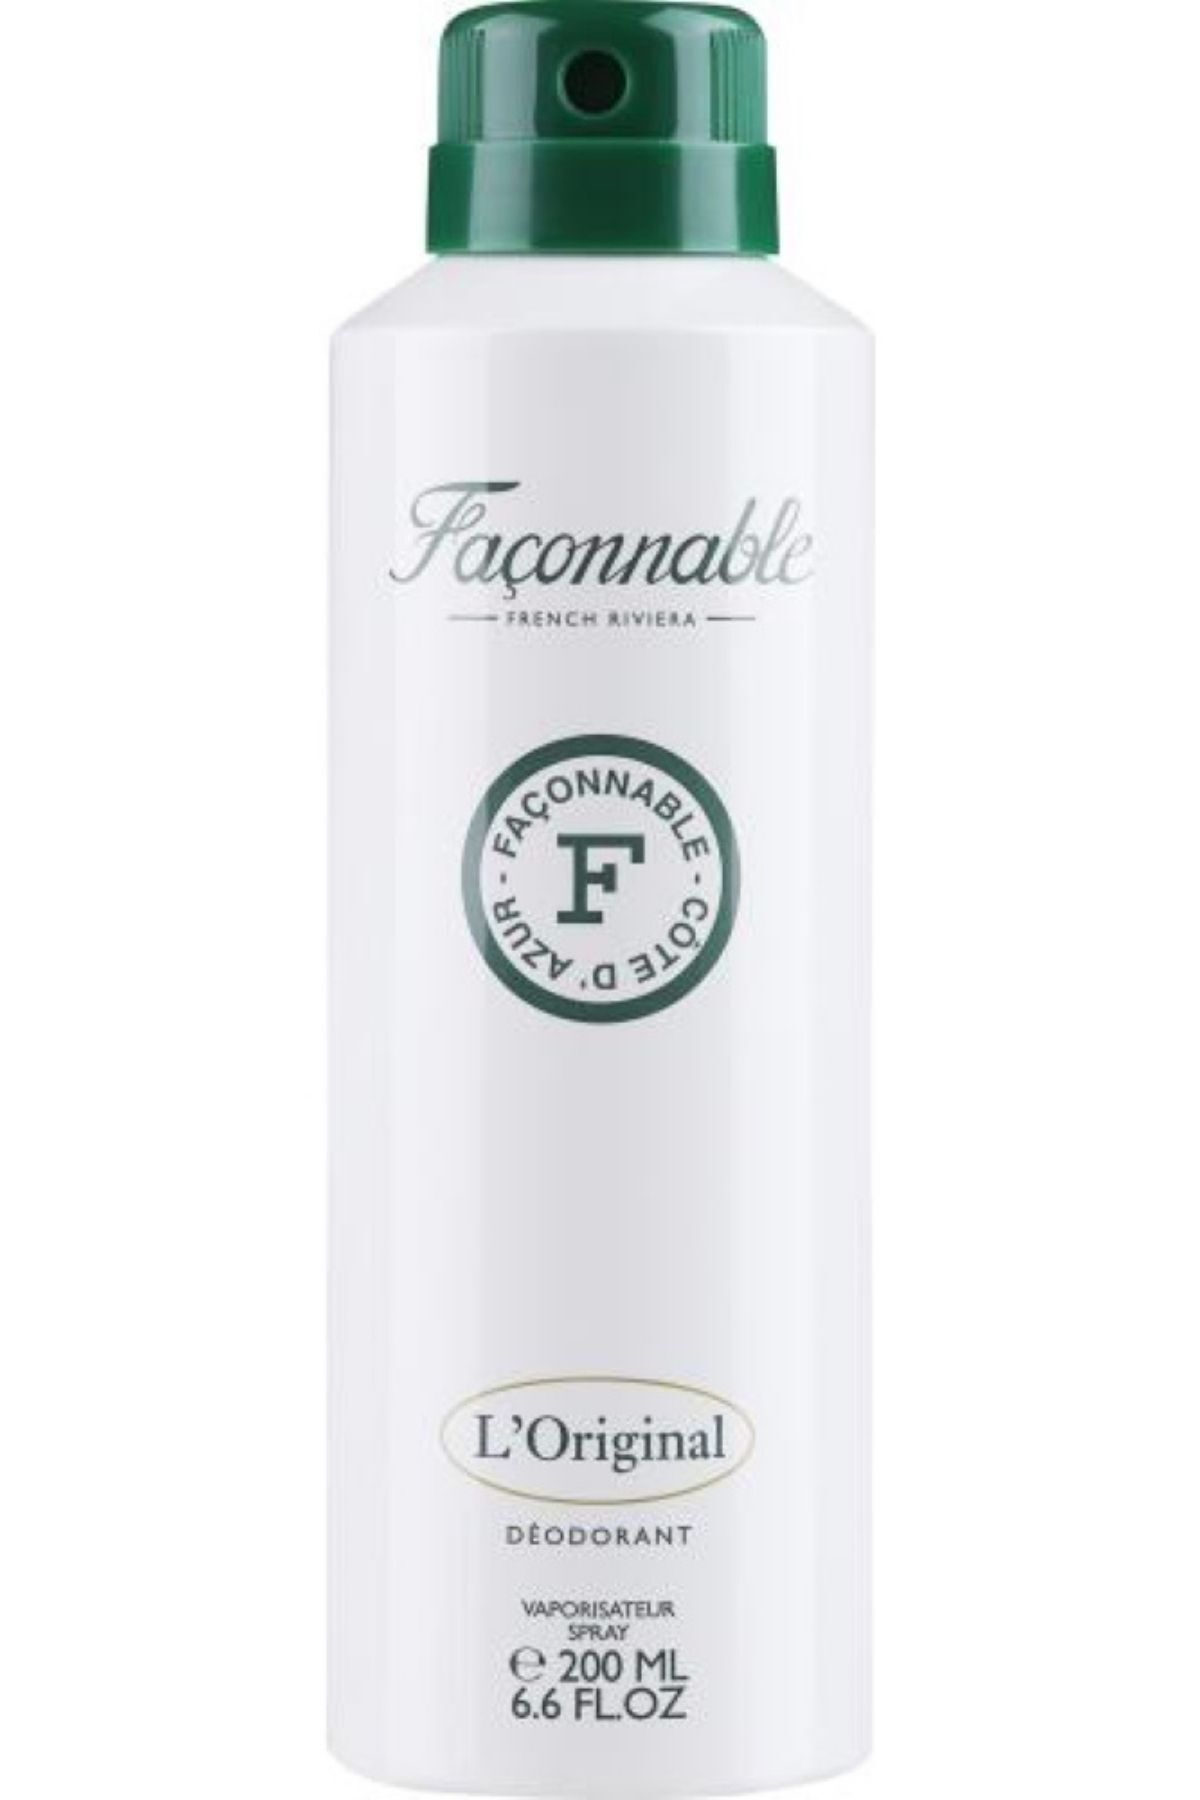 Façonnable L'Original Deodorant 200 Ml